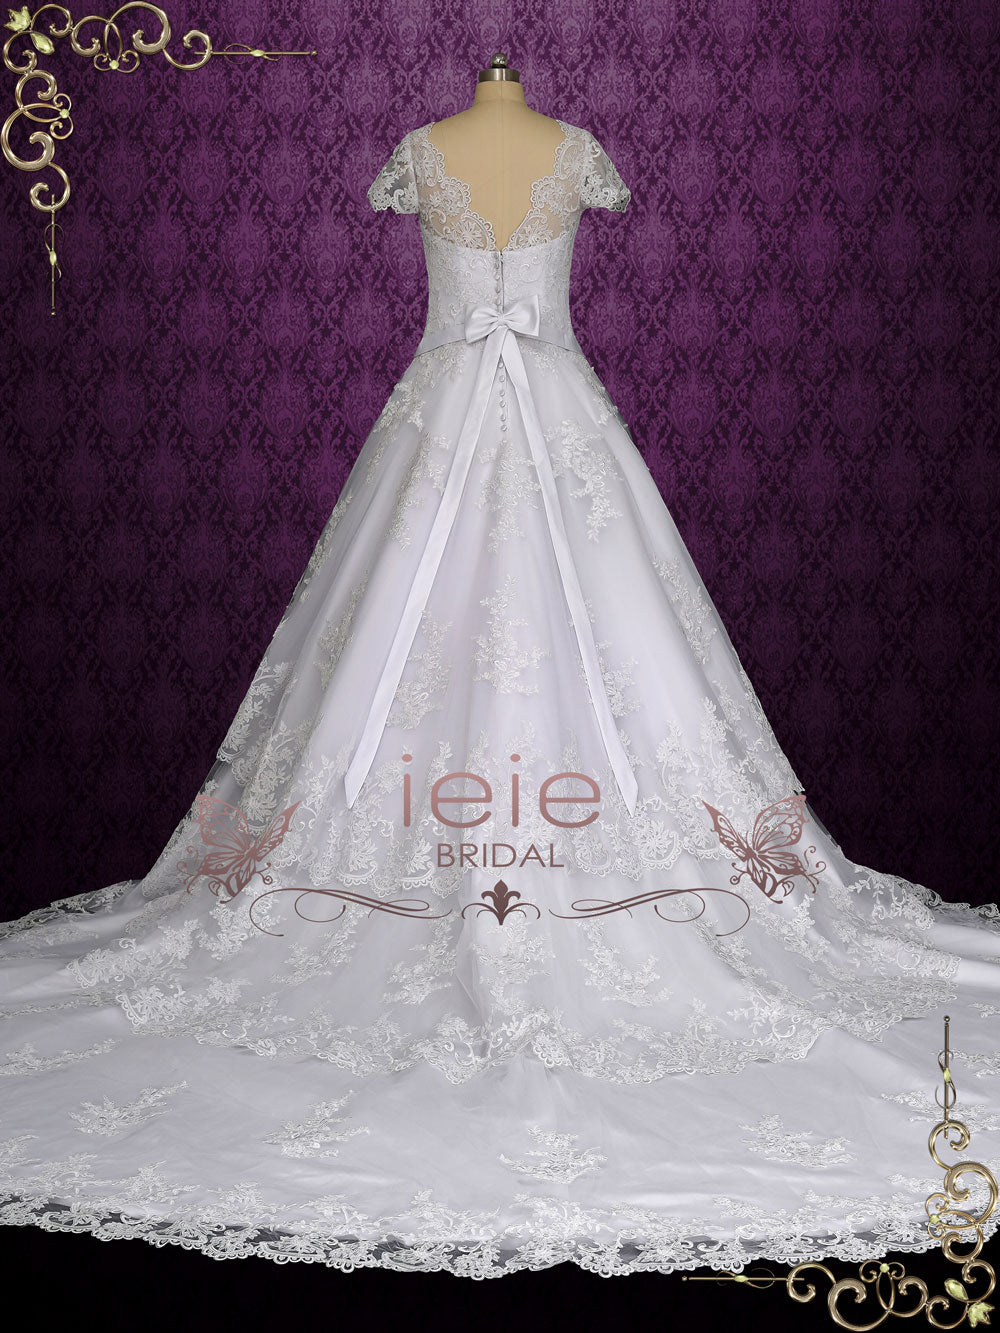 42 Fairy Tale Wedding Dresses For The Disney Princess Bride! - Praise  Wedding